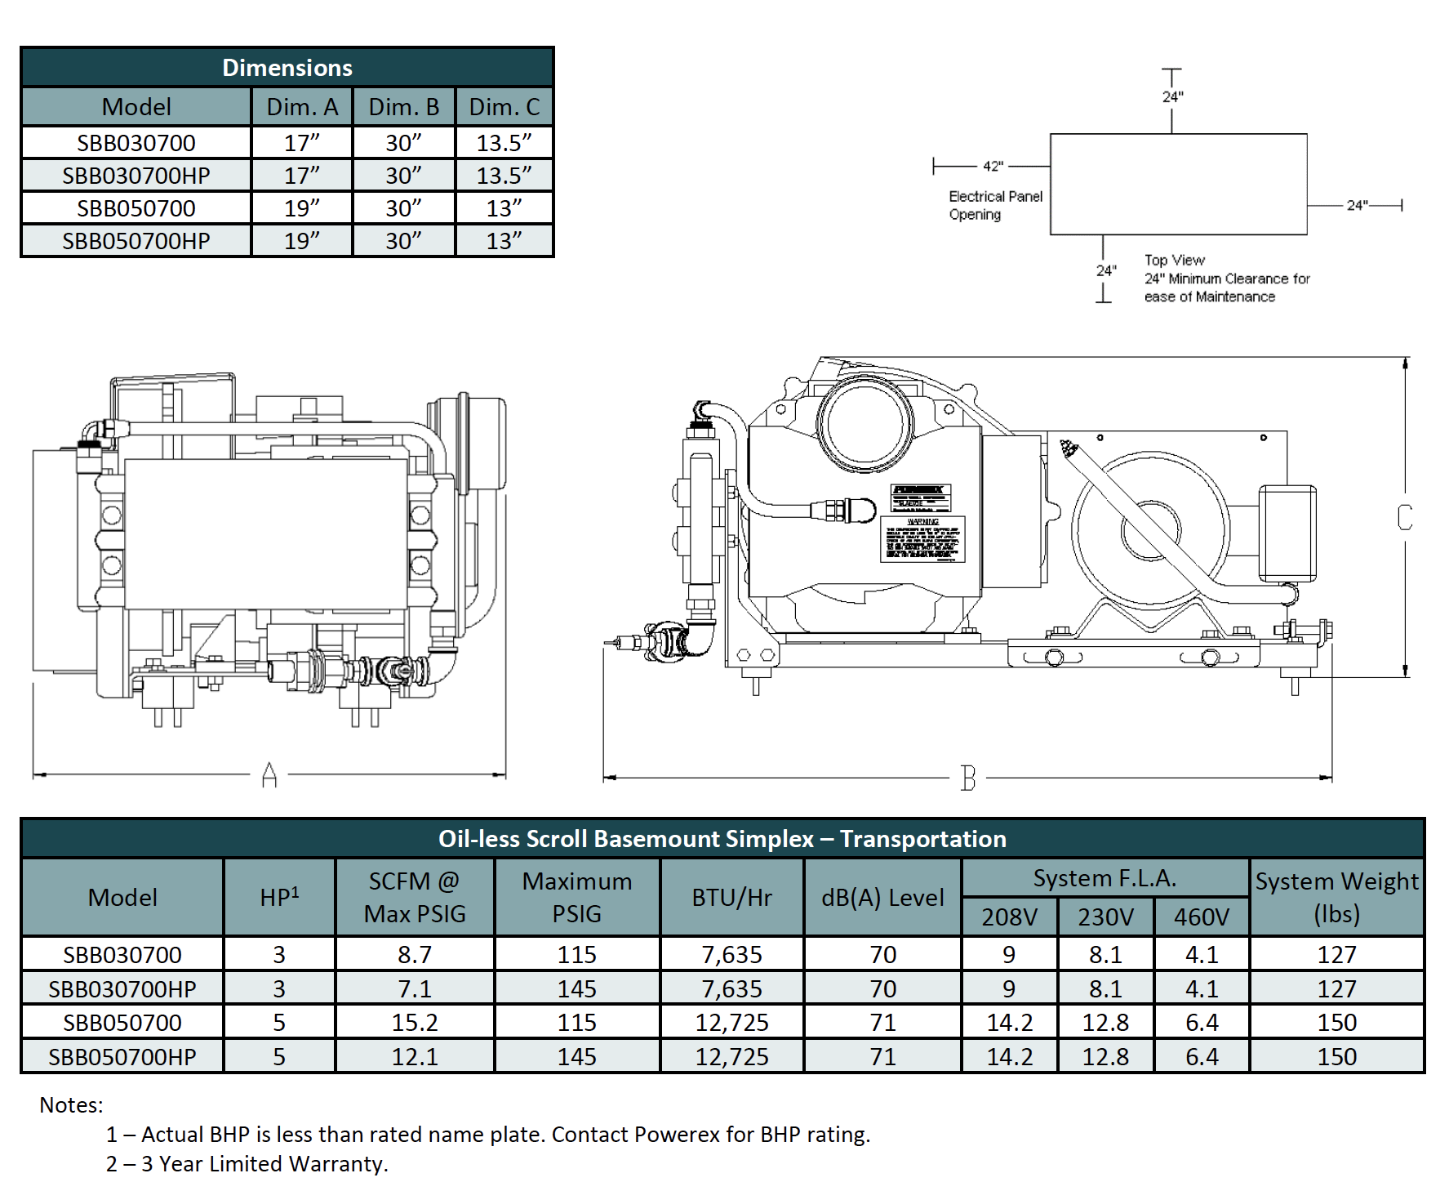 Air Pressor Single Phase Wiring Diagram